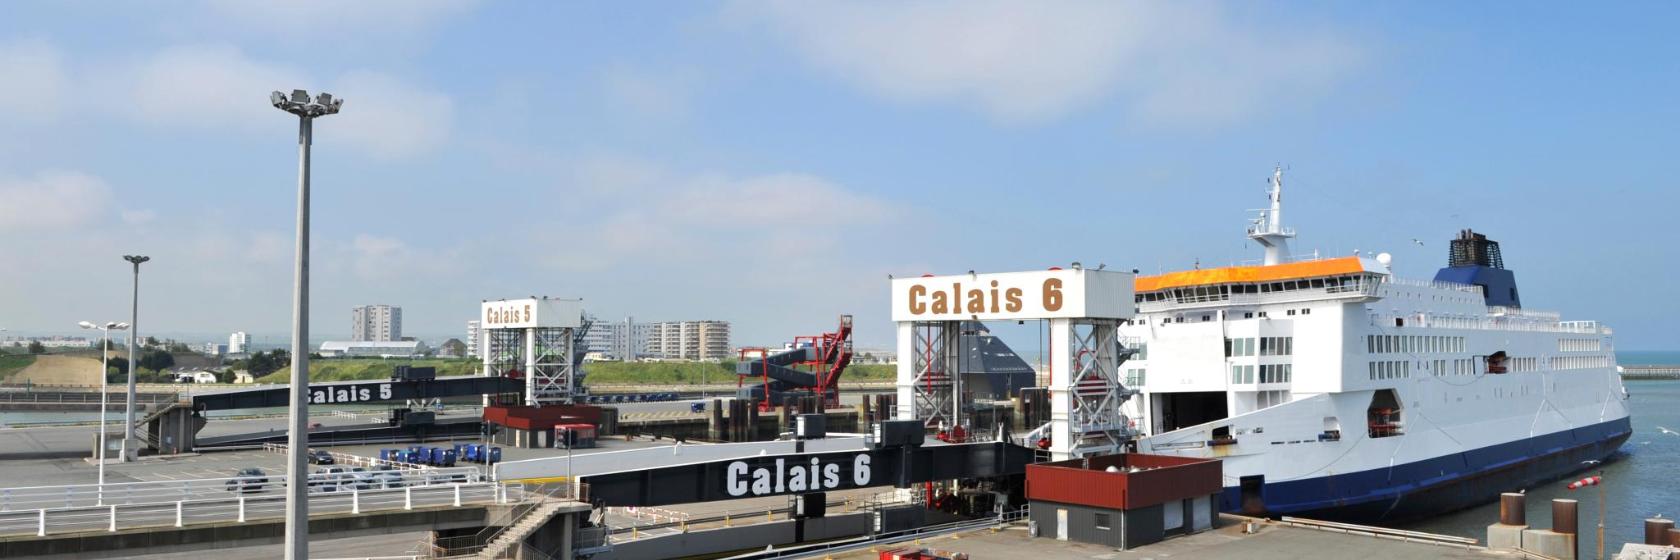 The 10 best hotels near Calais Ferry Terminal in Calais, France